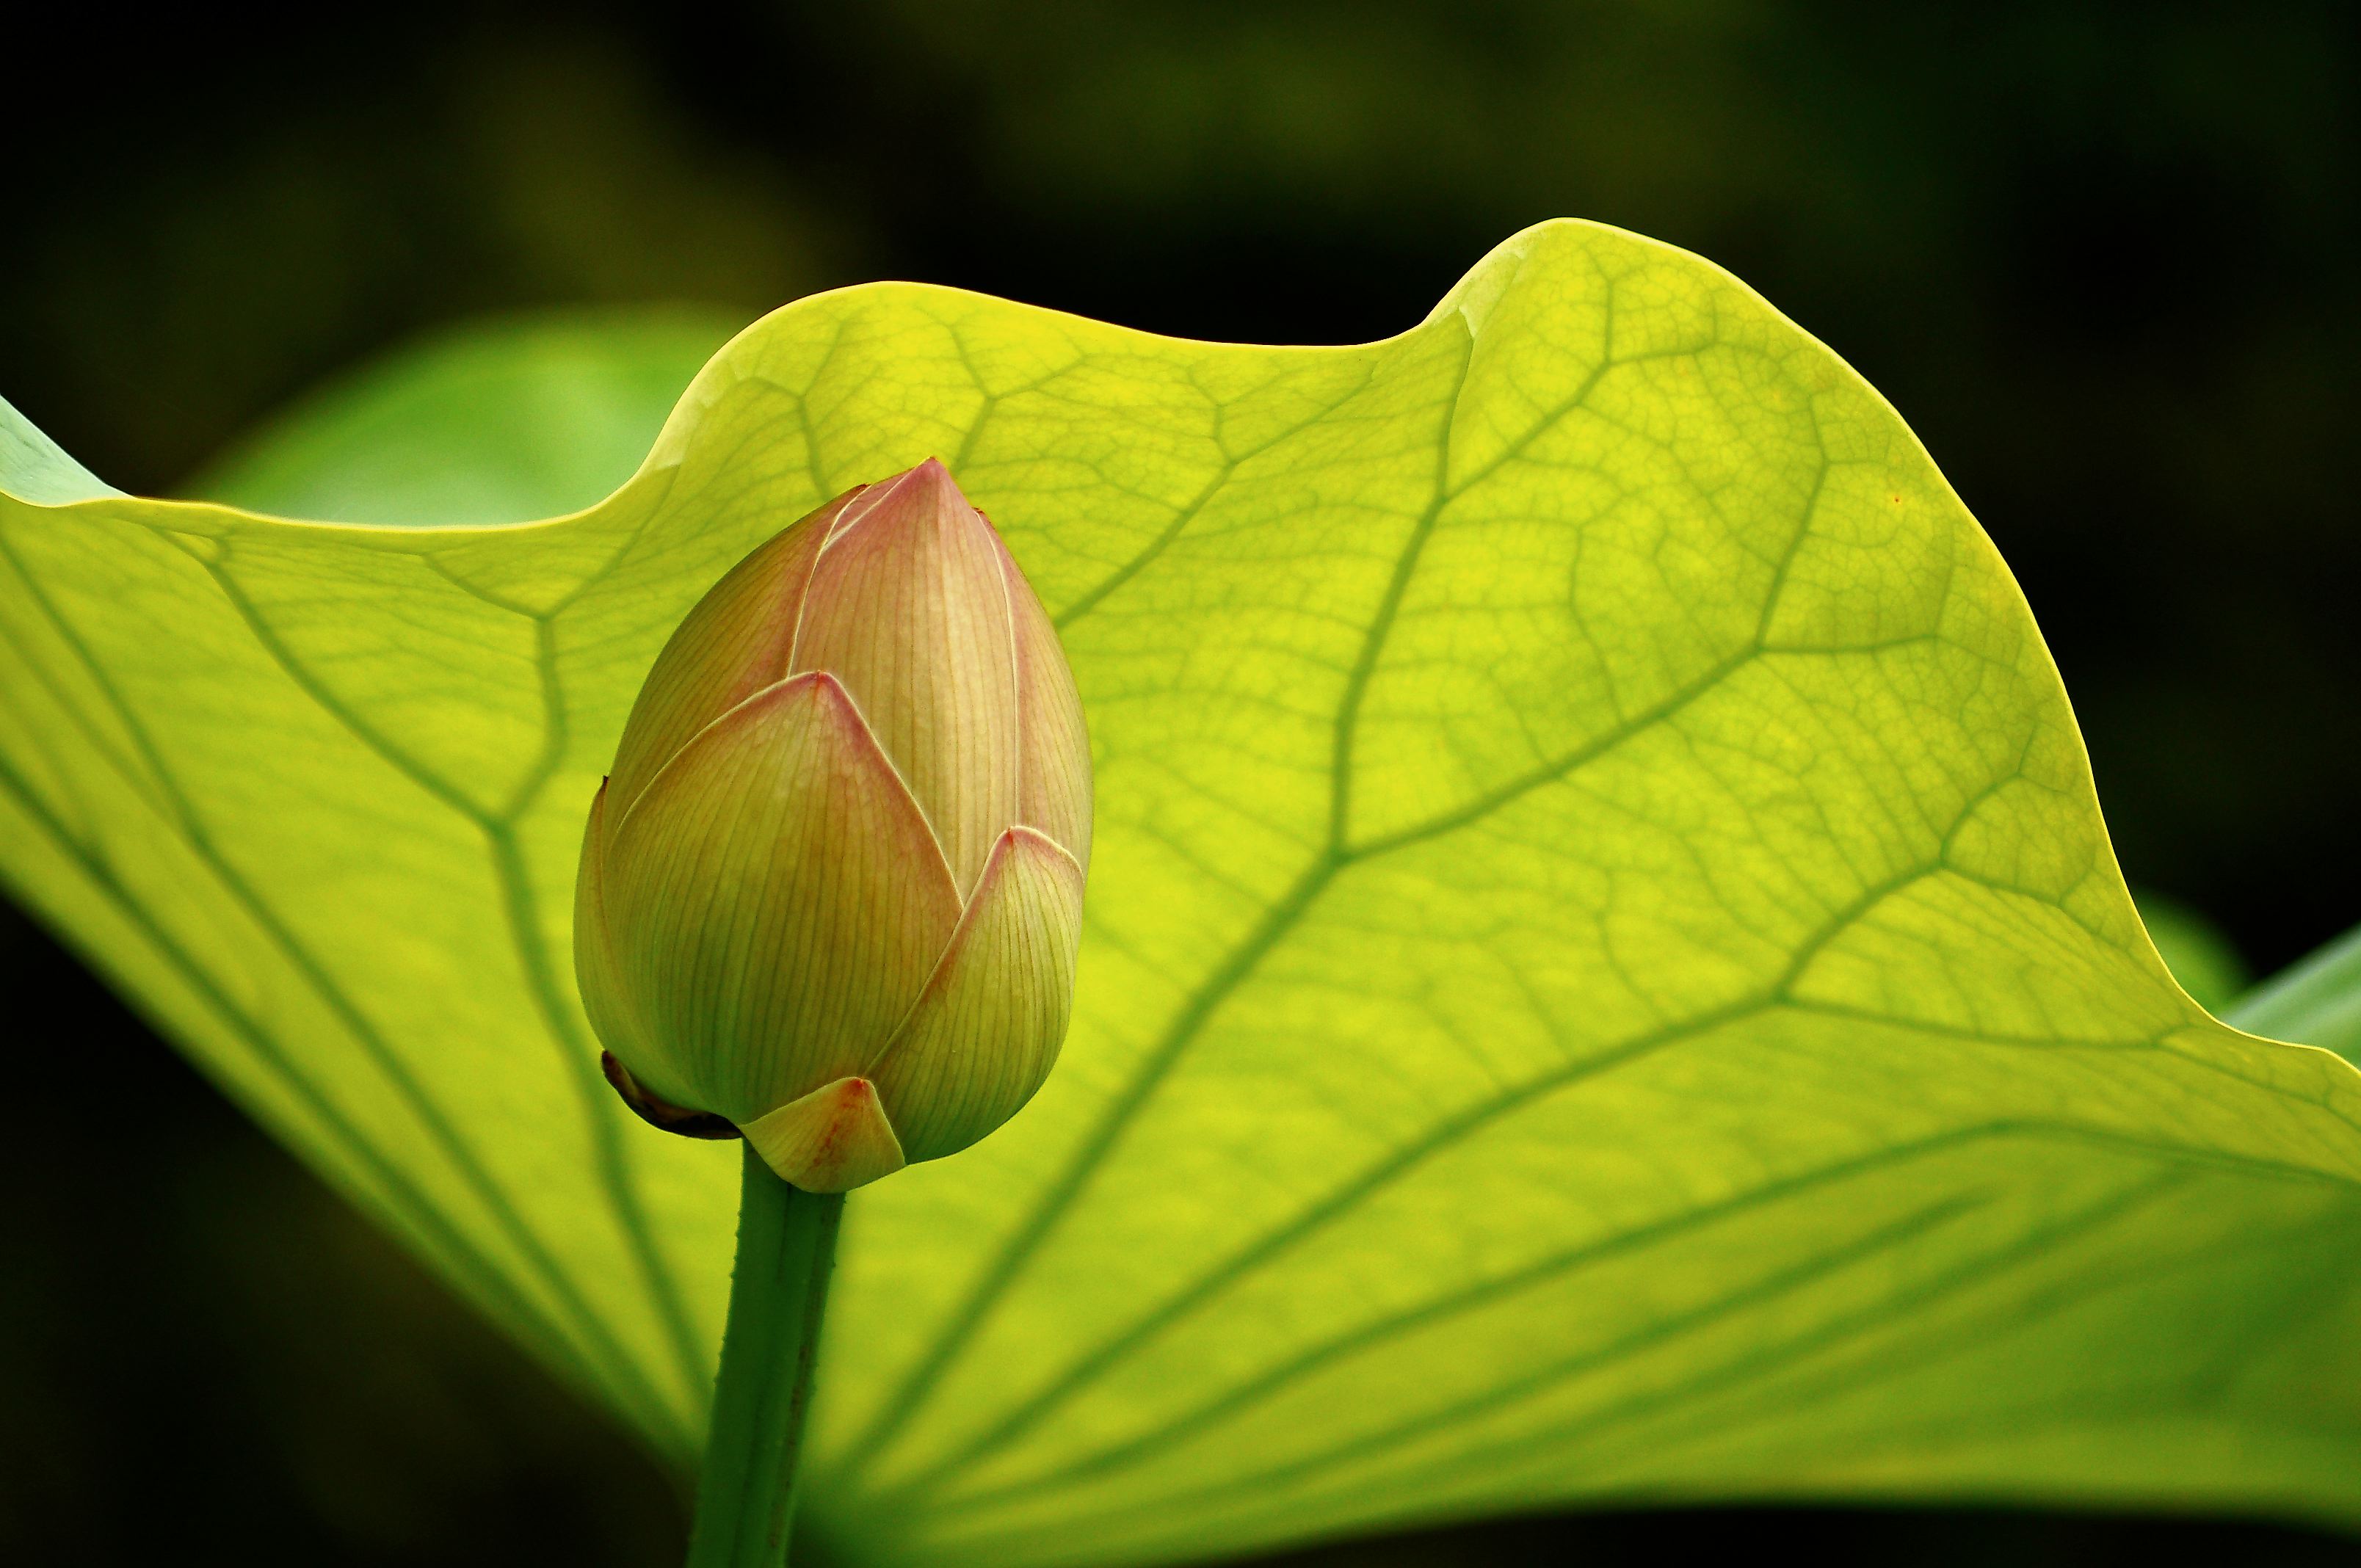 Colorful lotus flower in high definition desktop wallpaper.